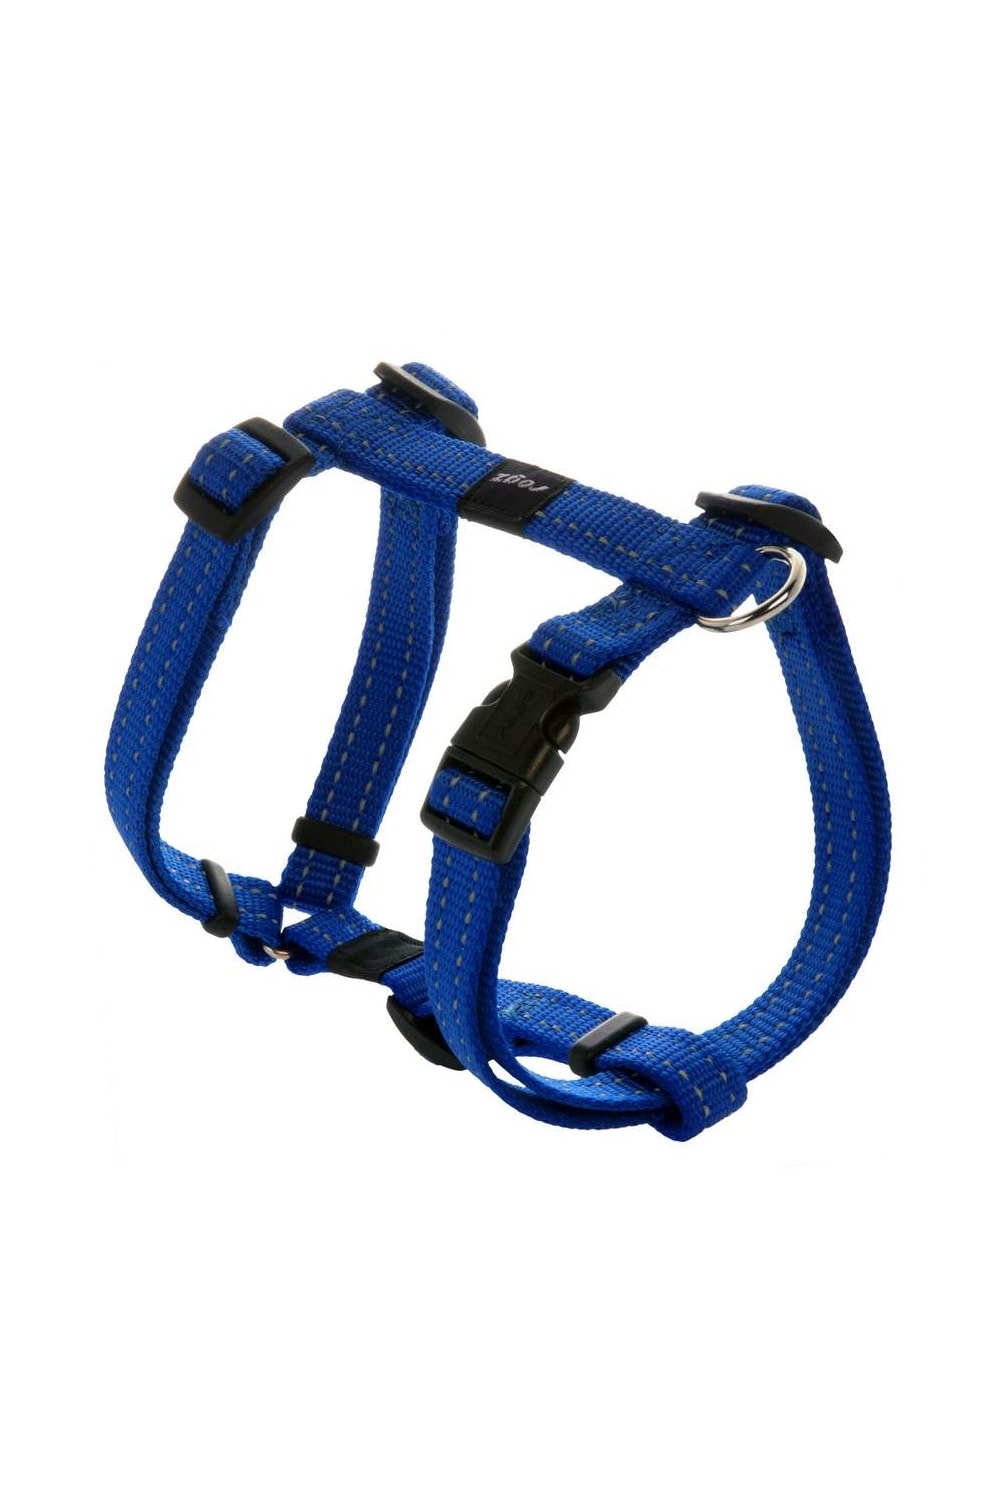 Rogz Utility Dog Harness (Blue/Black) (12.6in - 20.47in)